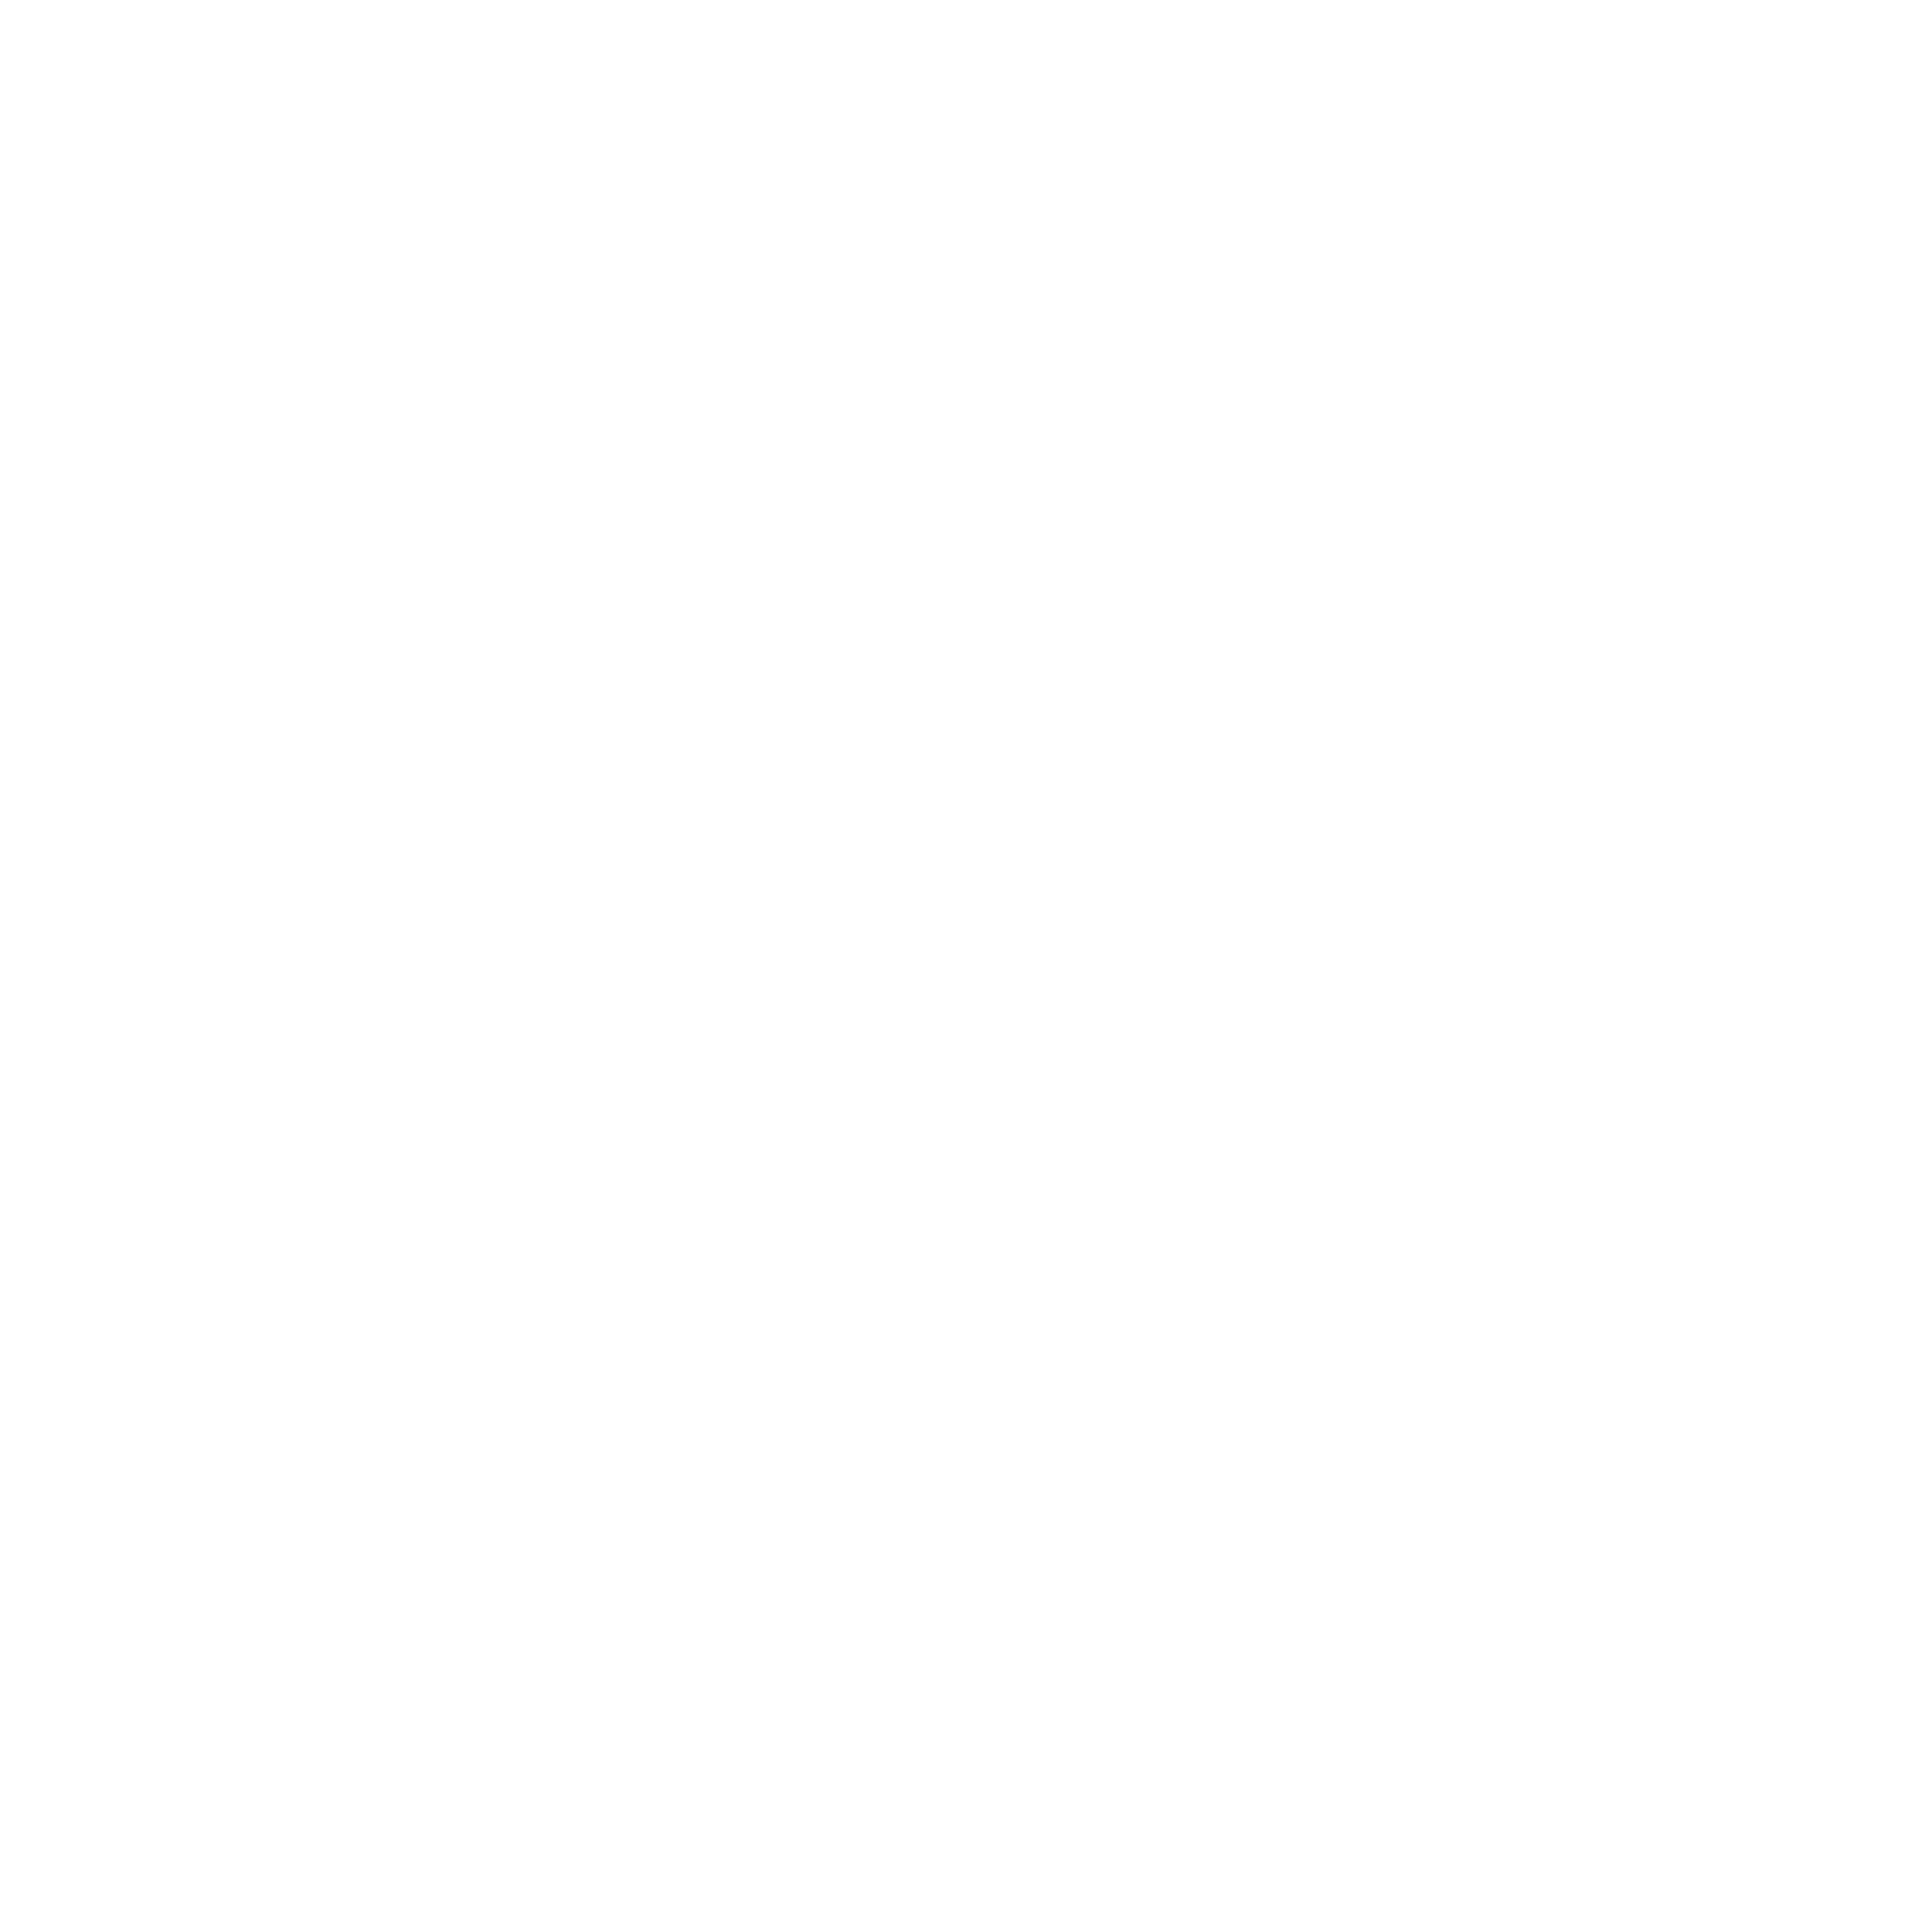 Lay bare Plus logo